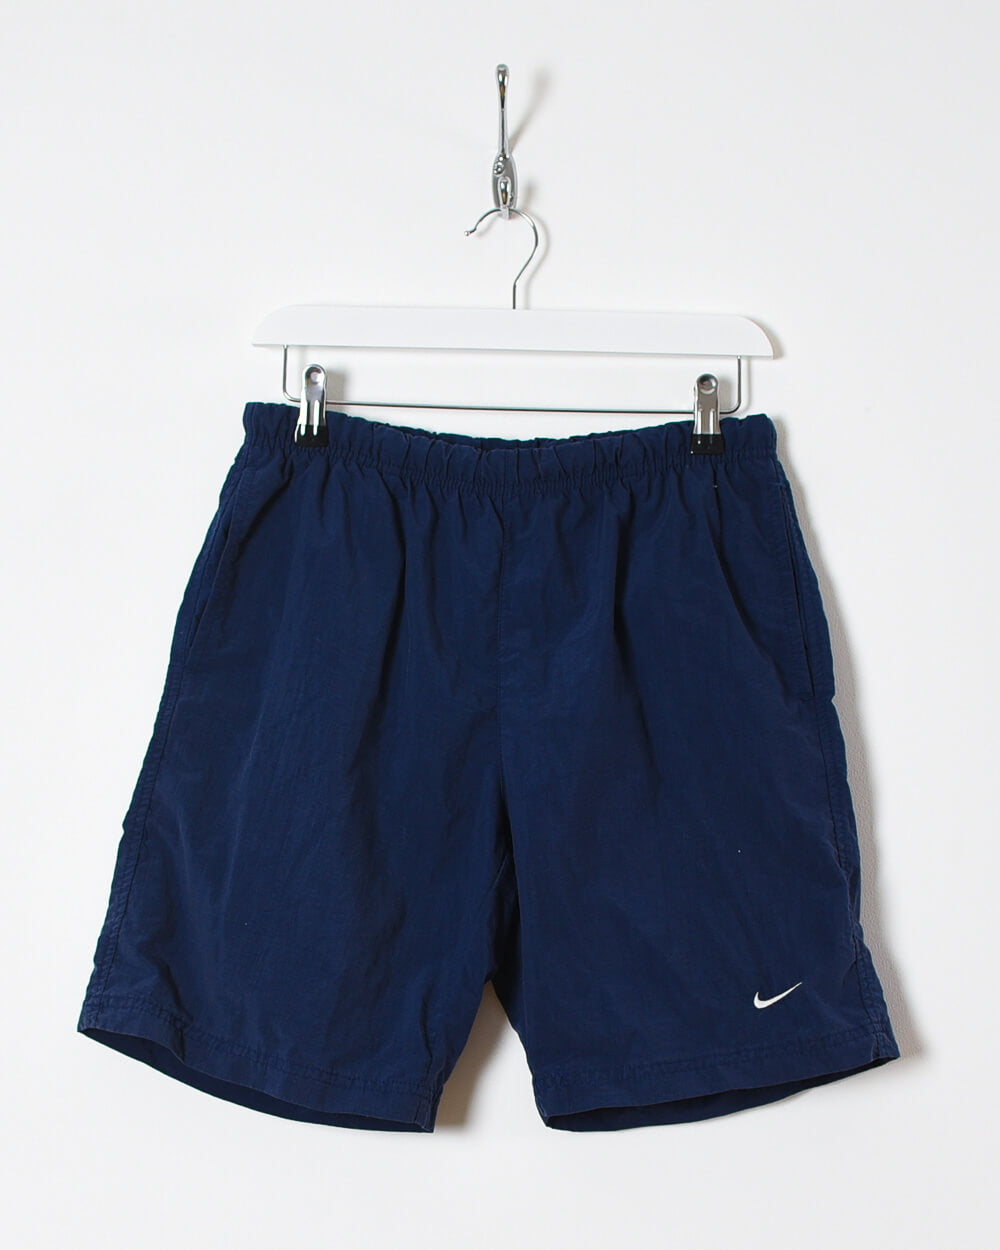 Nike Swimwear Shorts - W30 L17 - Domno Vintage 90s, 80s, 00s Retro and Vintage Clothing 